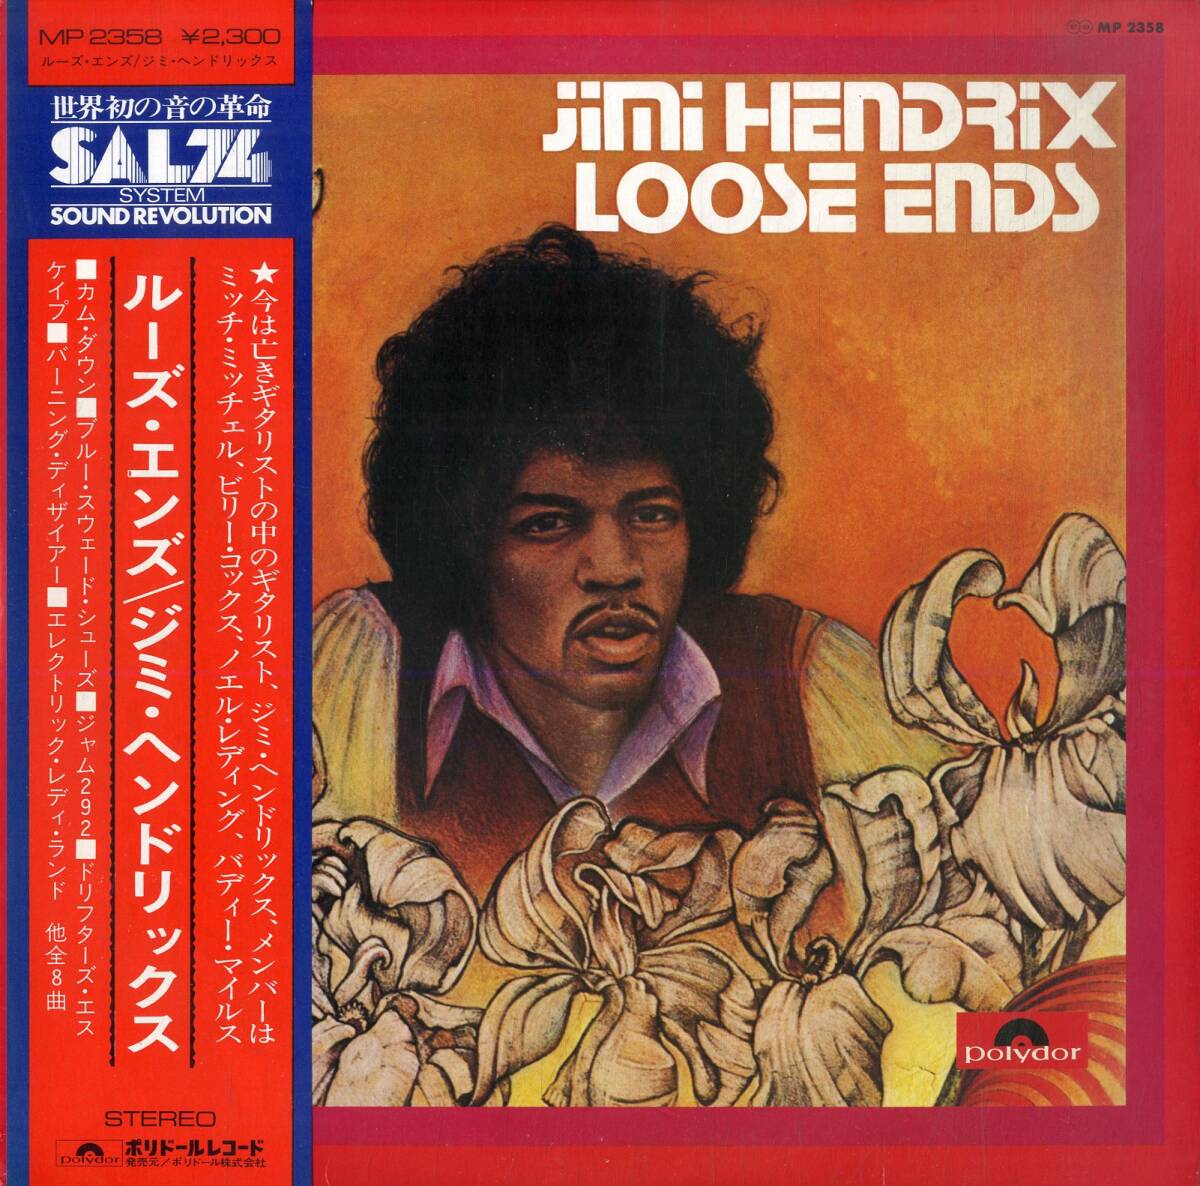 A00589680/LP/ジミ・ヘンドリックス (JIMI HENDRIX)「Loose Ends... (1974年・MP-2358・ブルースロック・サイケデリックロック)」_画像1